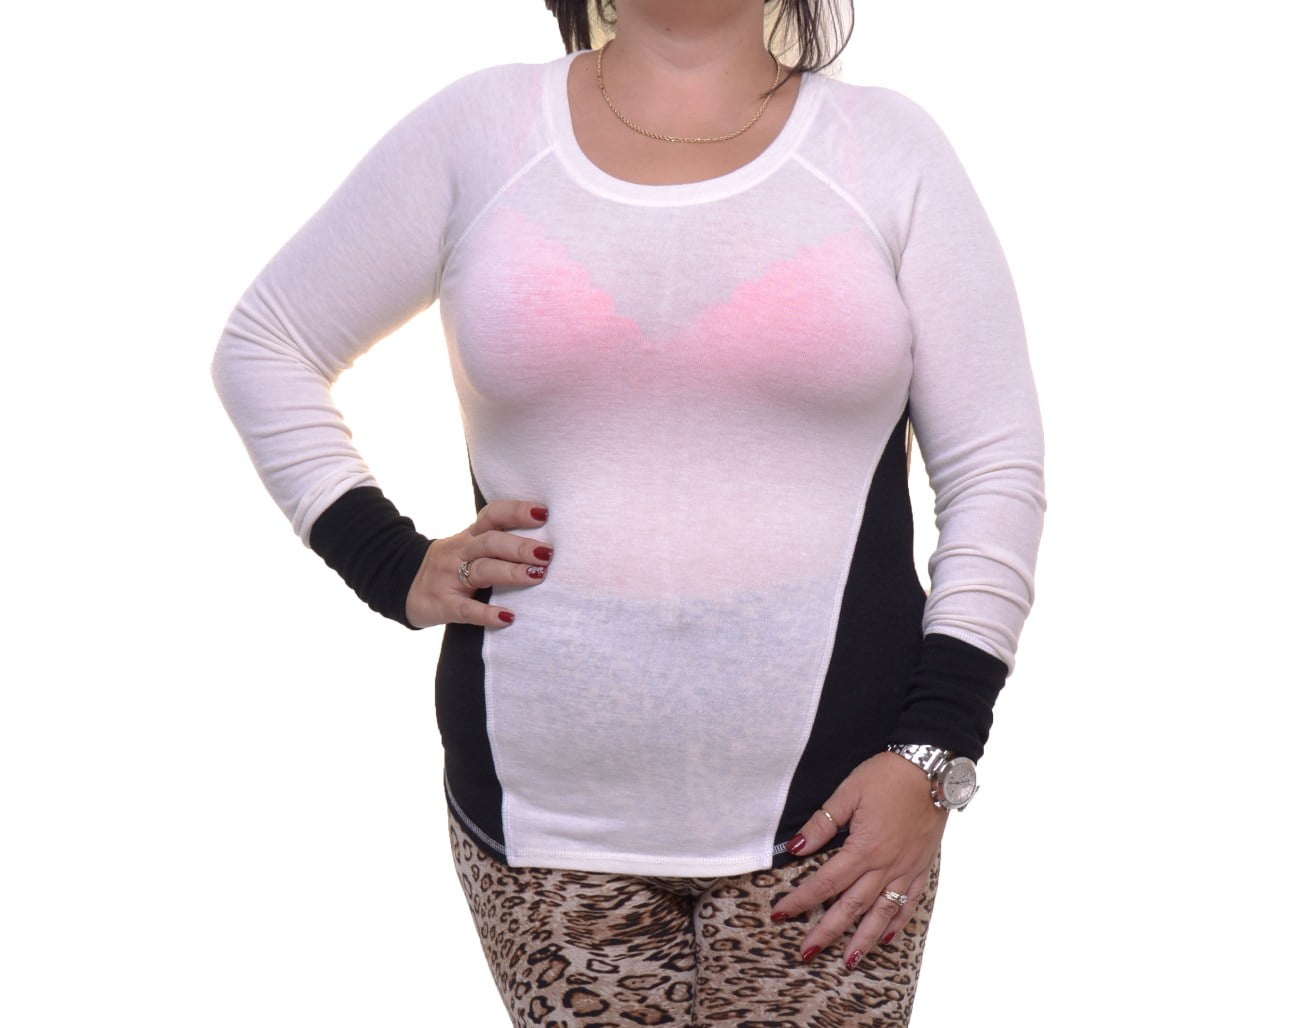 M RACHEL ROY Womens Pink Long Sleeve Crew Neck Blouse Evening Top Size